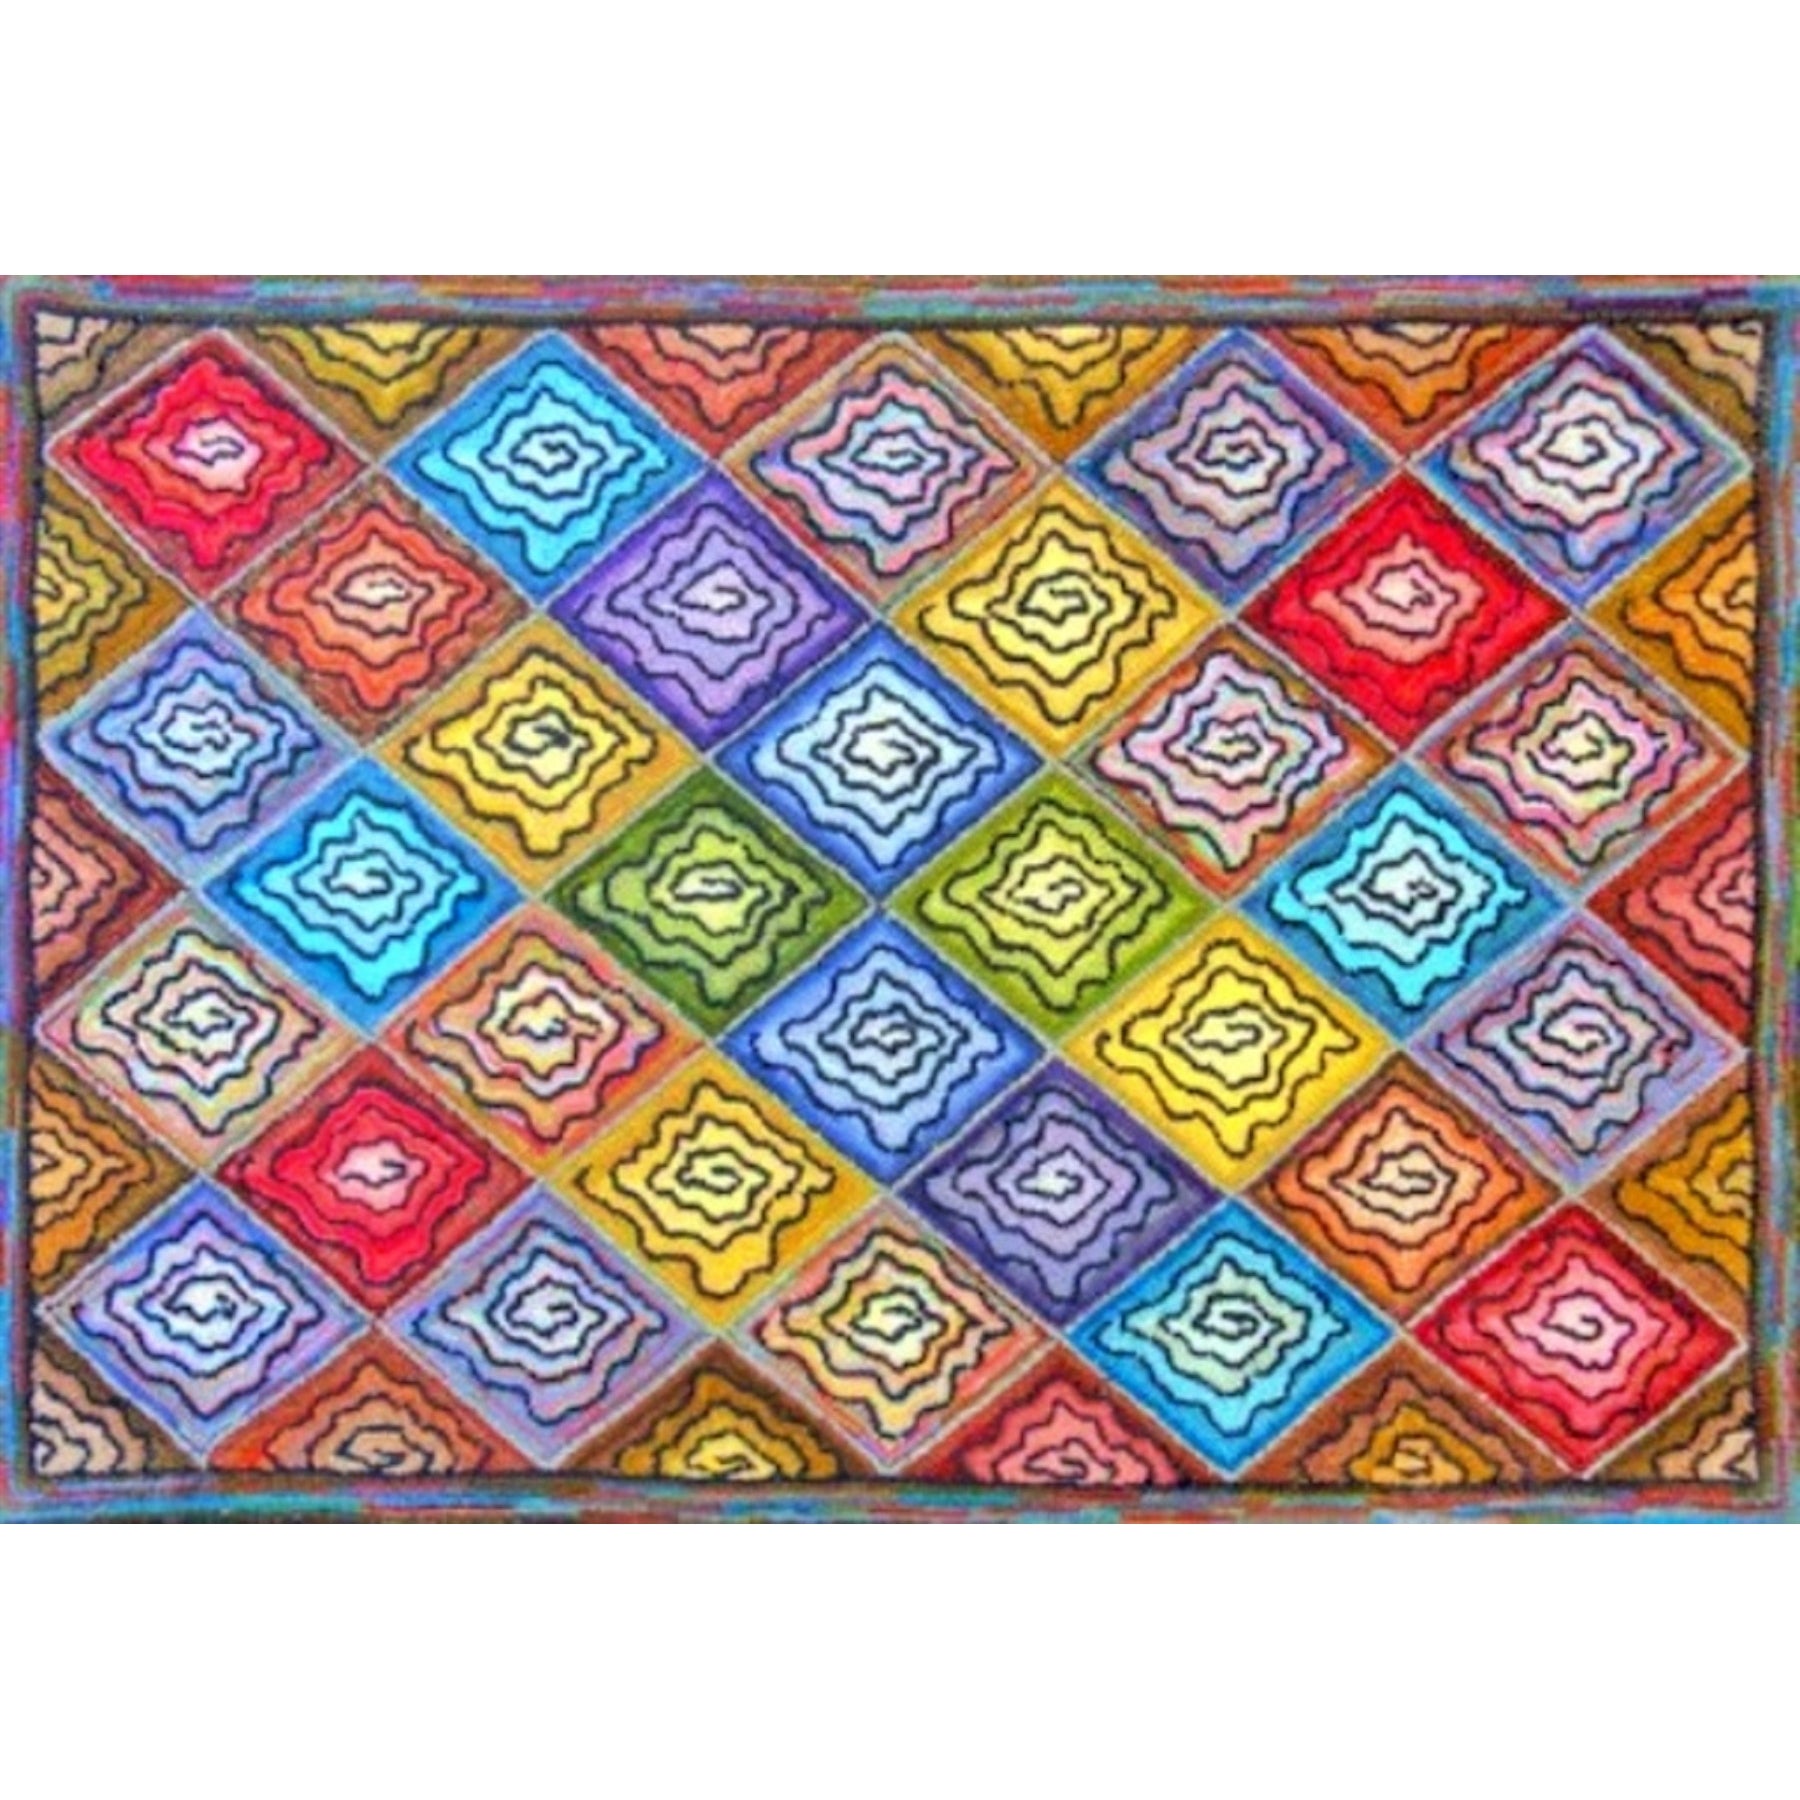 Quaint, rug hooked by Karen Maddox